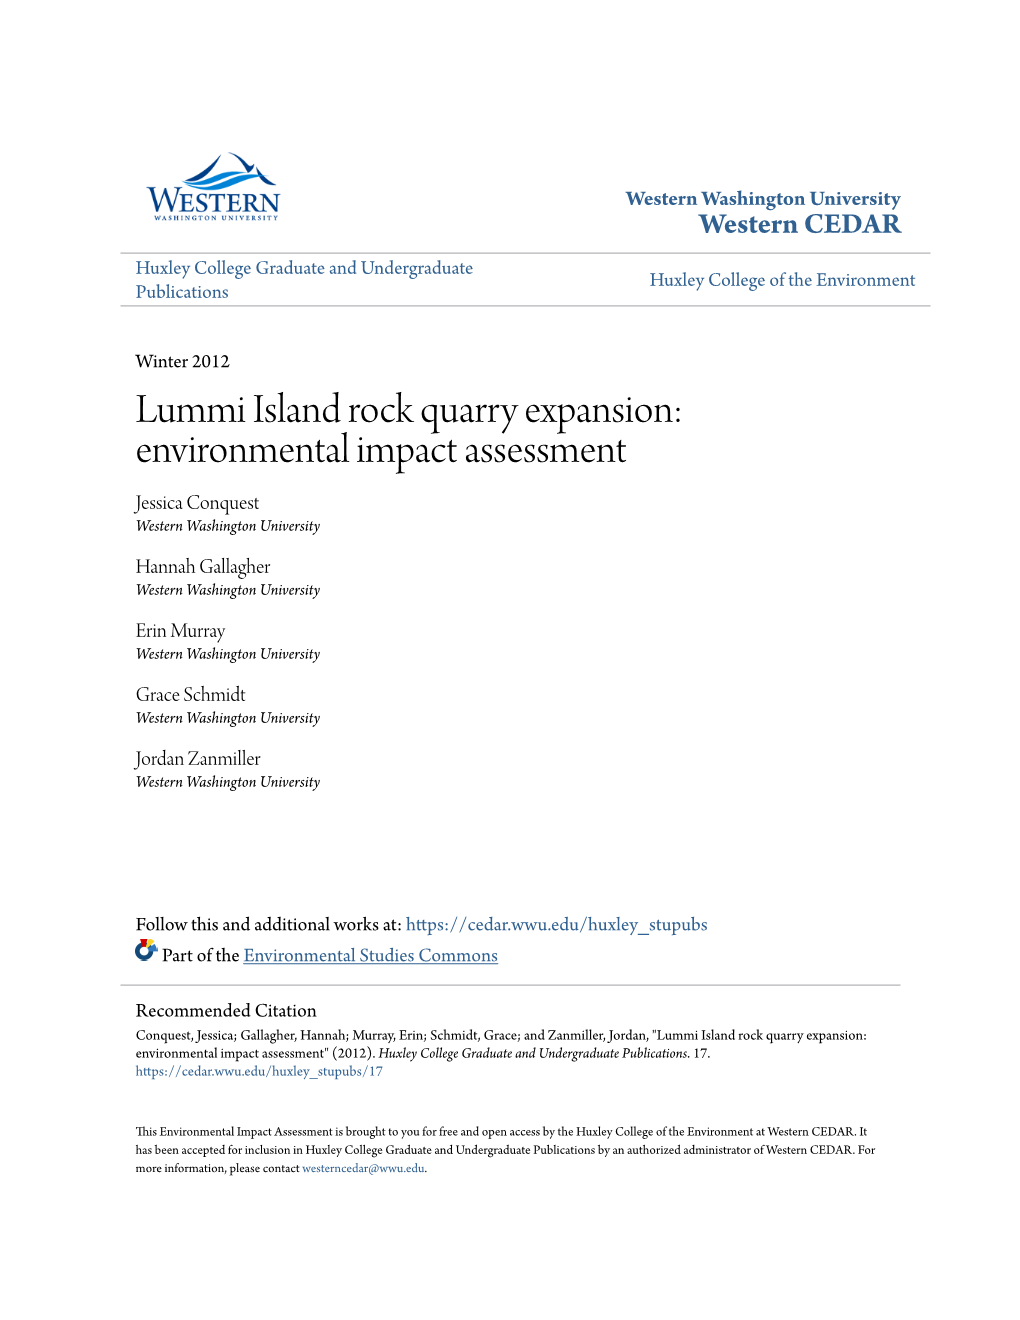 Lummi Island Rock Quarry Expansion: Environmental Impact Assessment Jessica Conquest Western Washington University